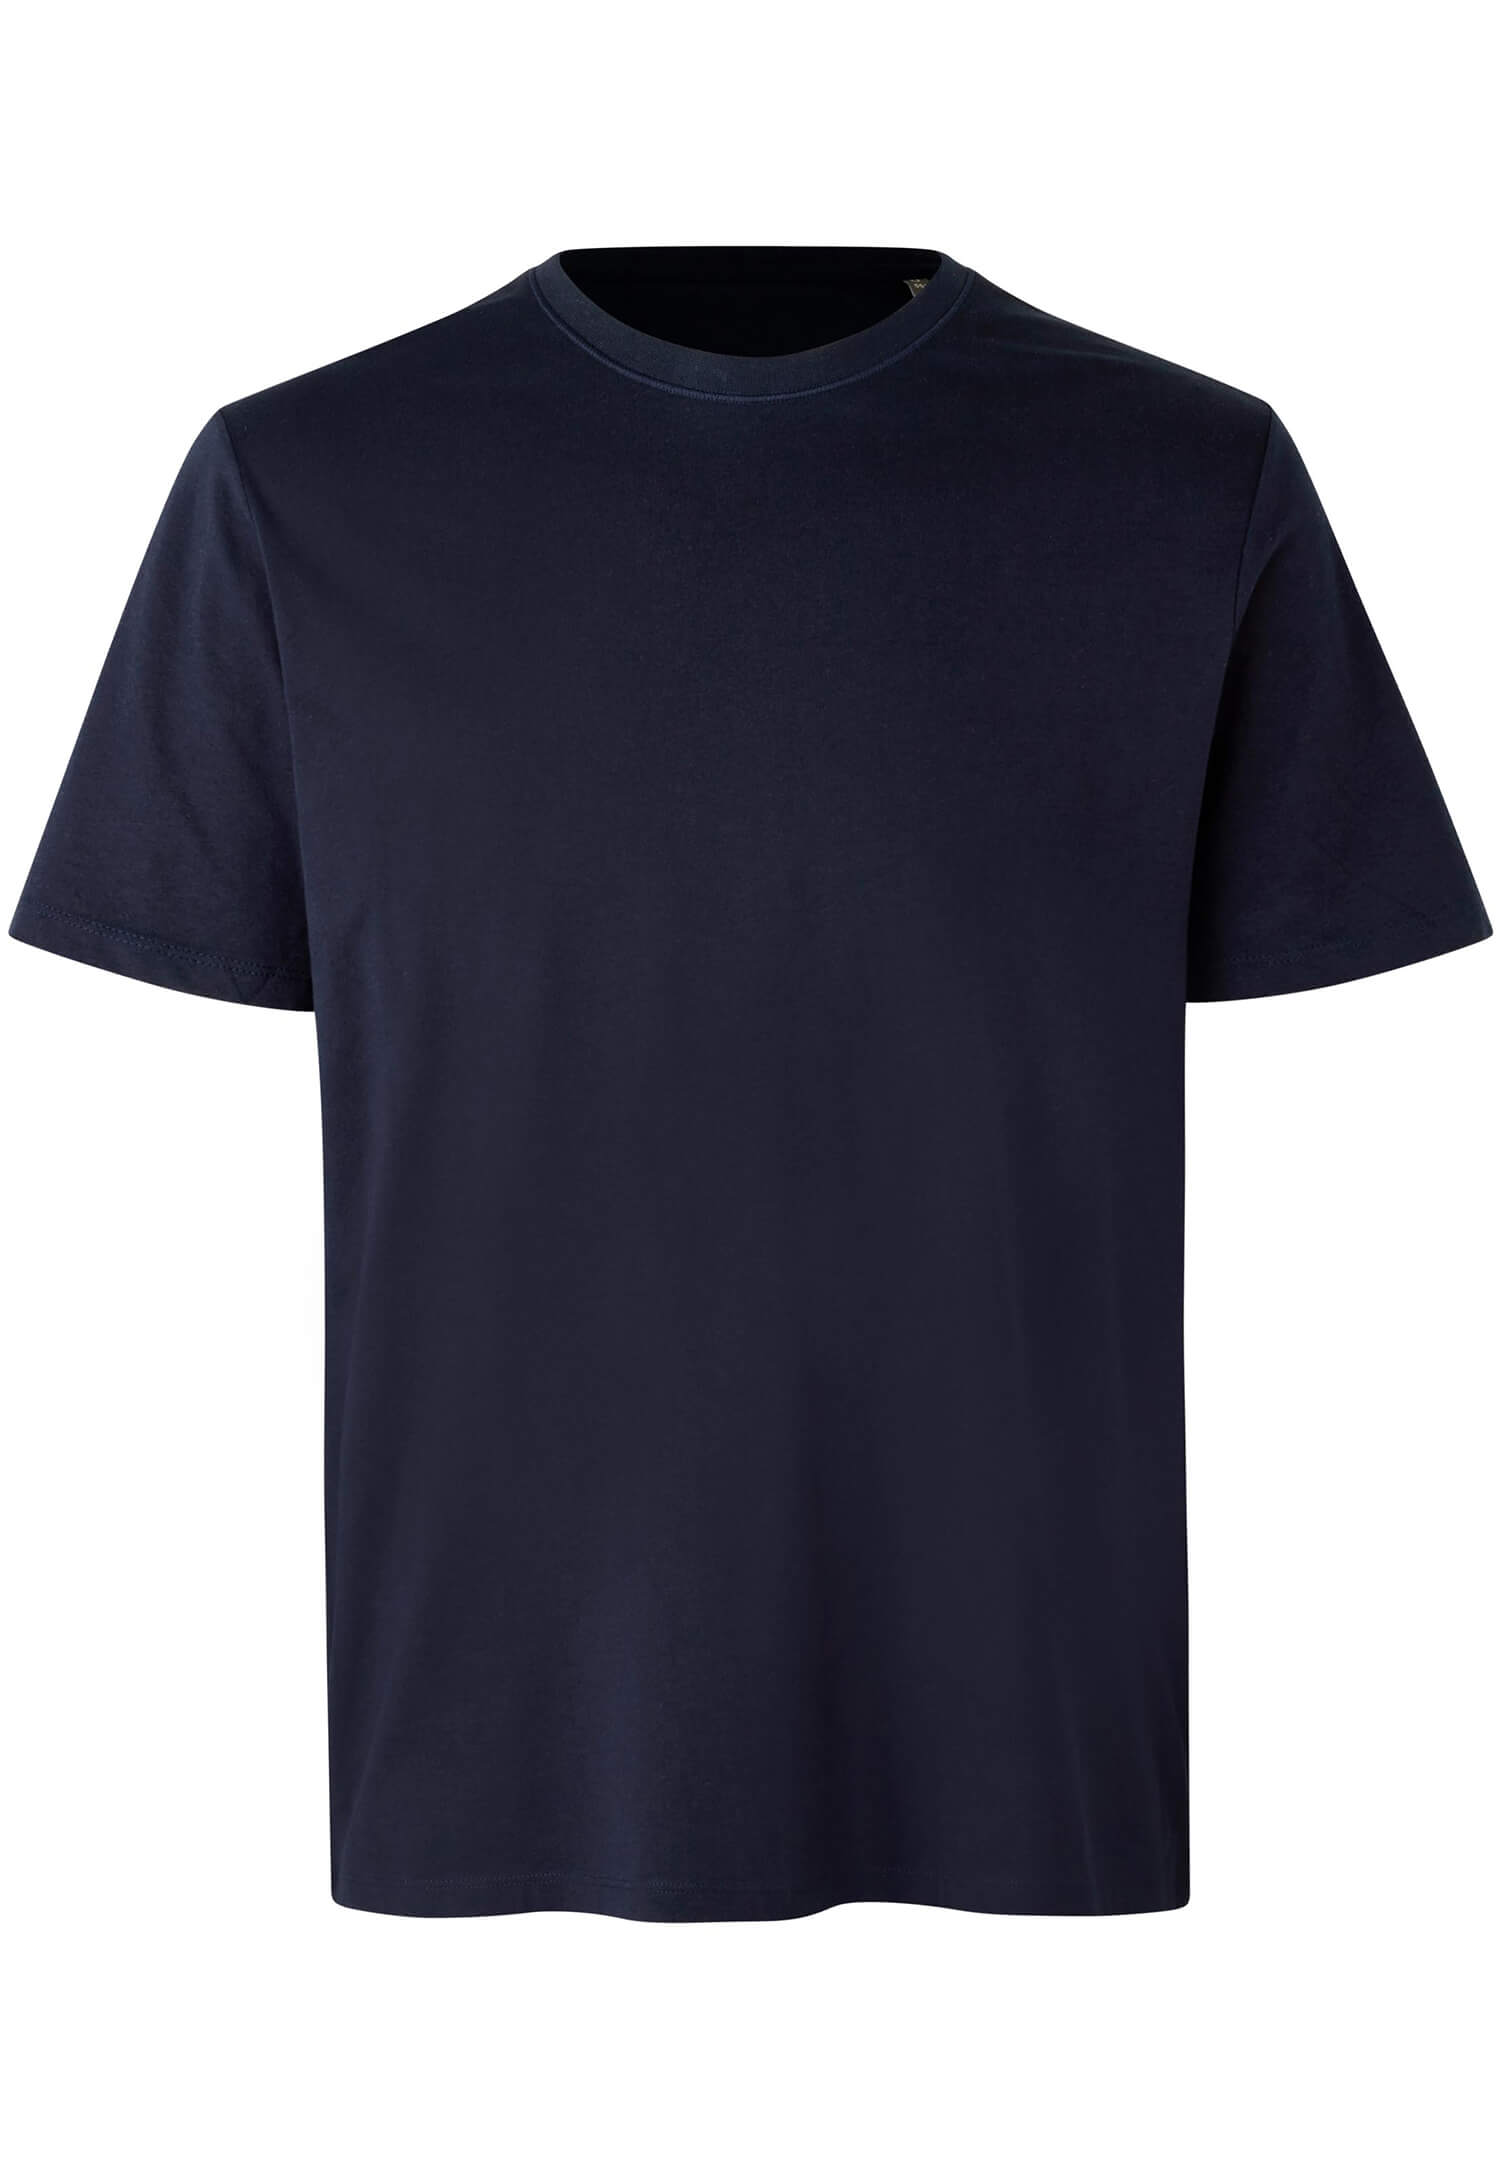 Herren Bio T-Shirt - marine - 4XL